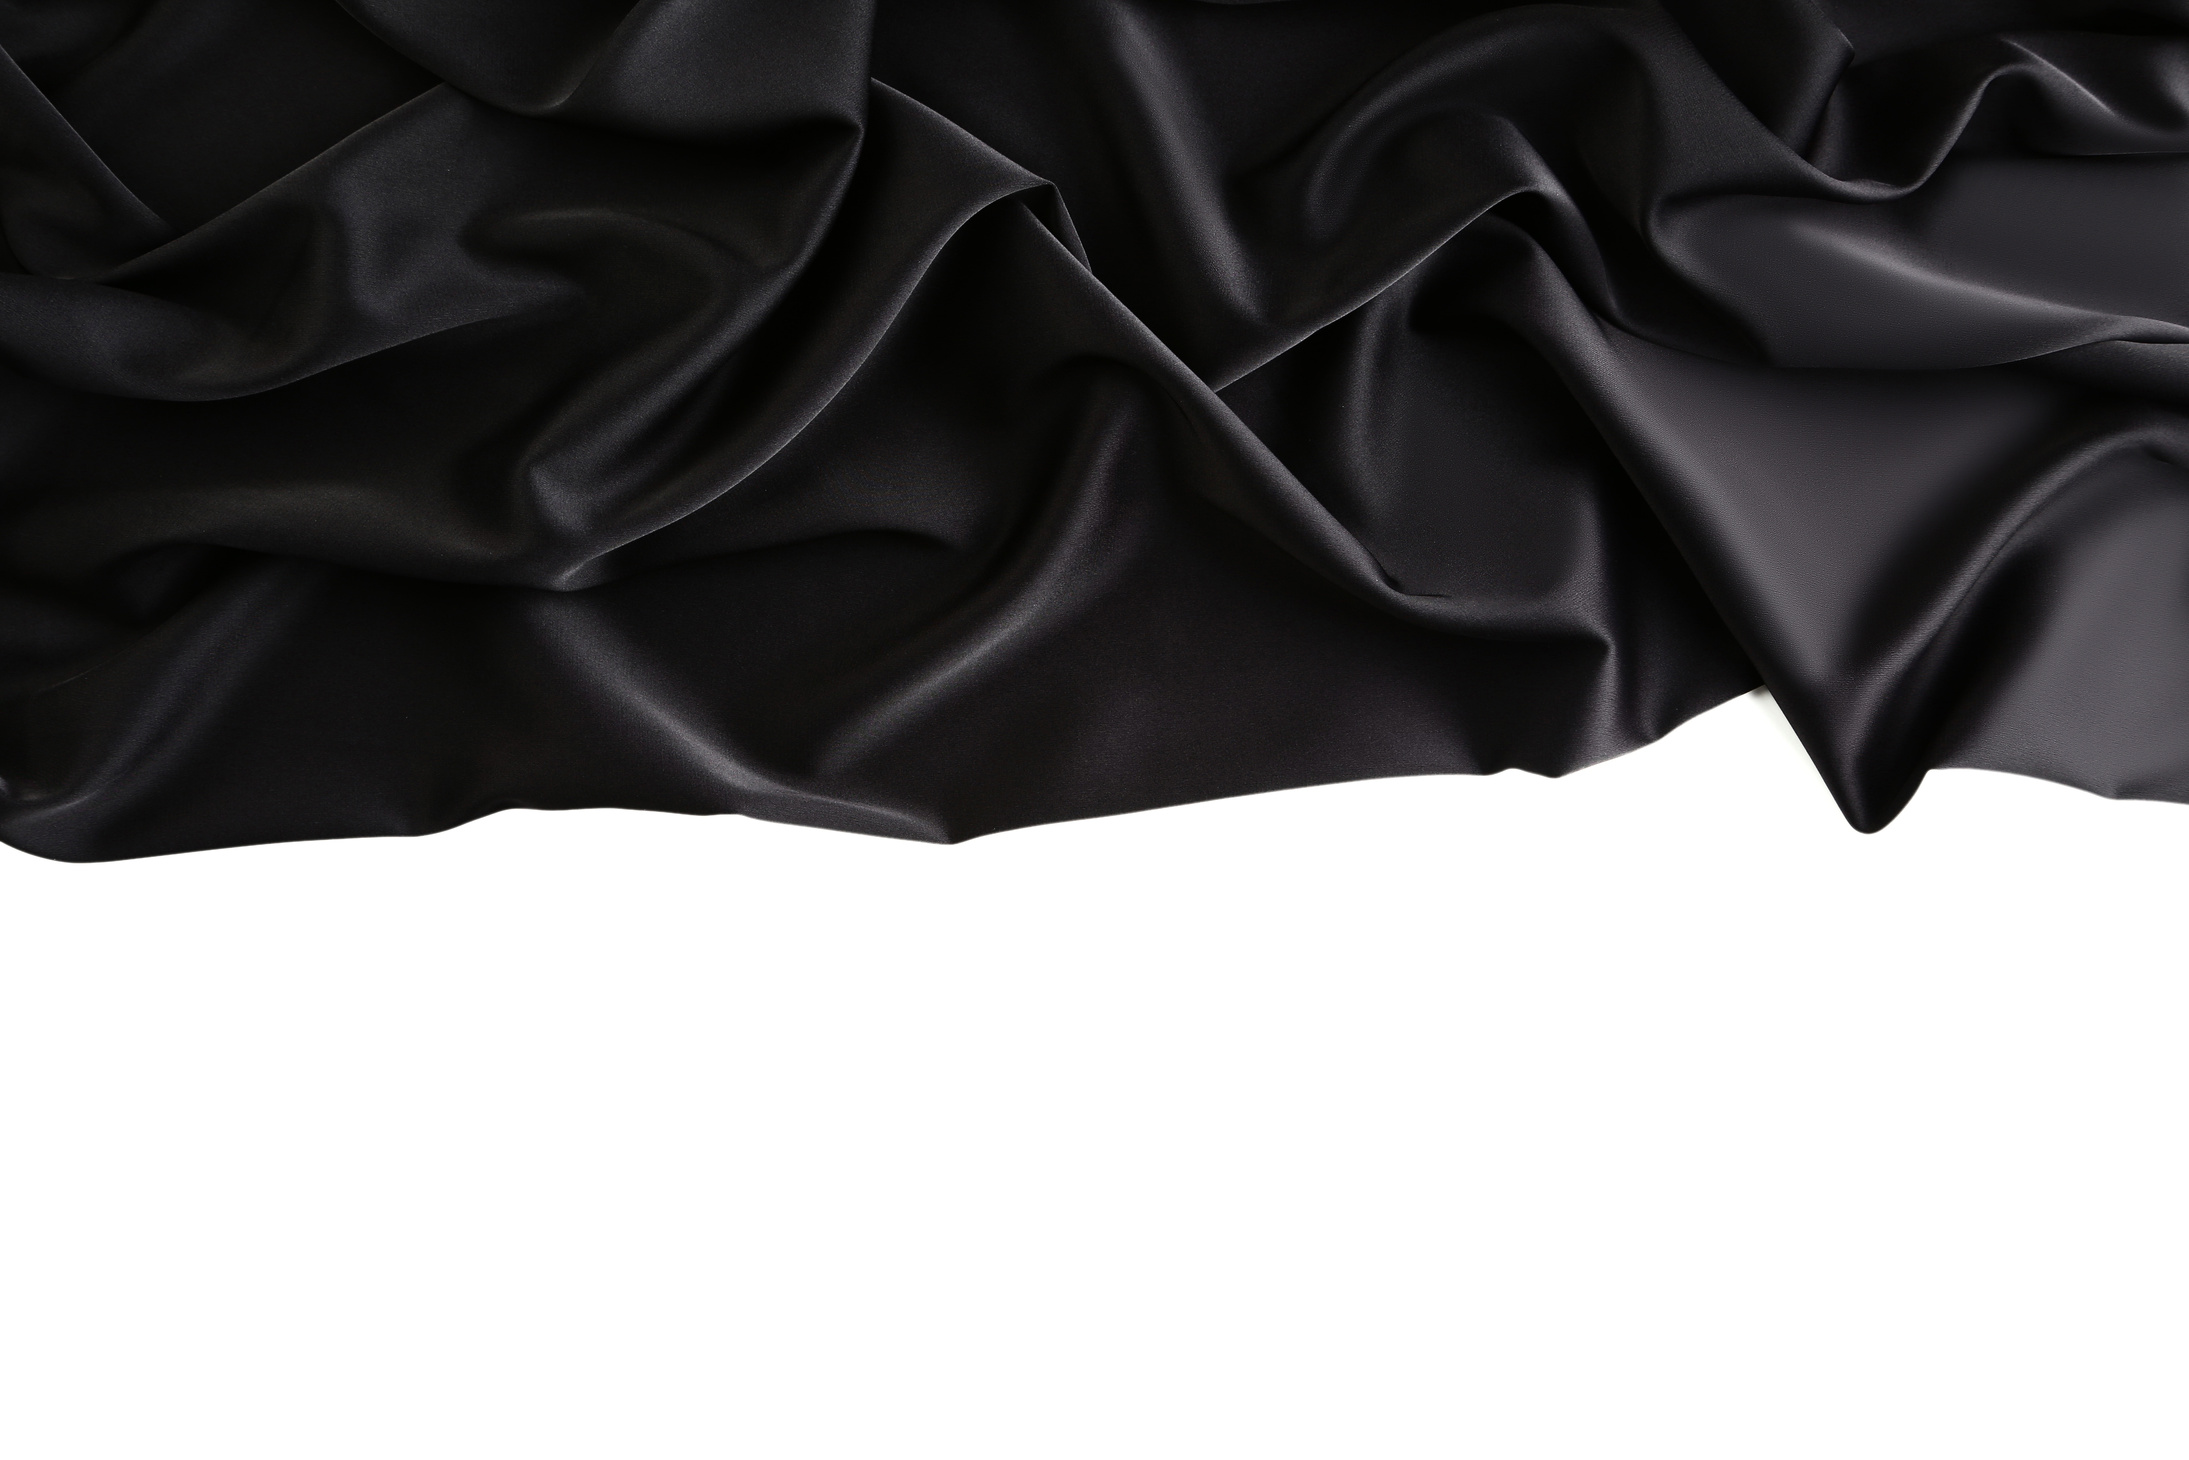 Black satin cloth on white background